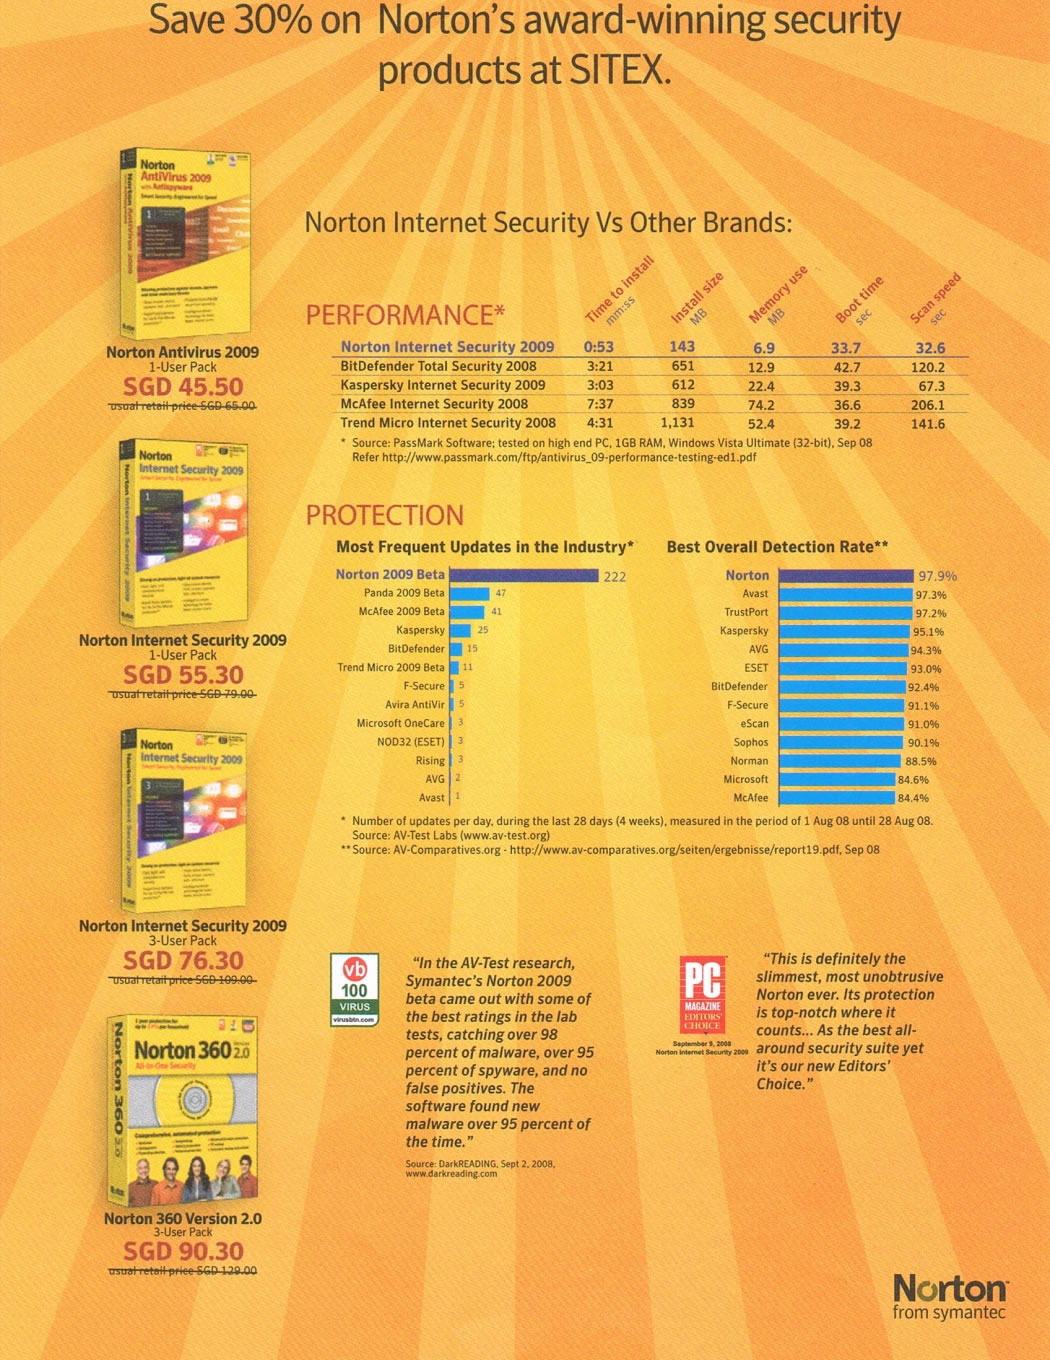 Sitex 2008 price list image brochure of Norton 1xb3